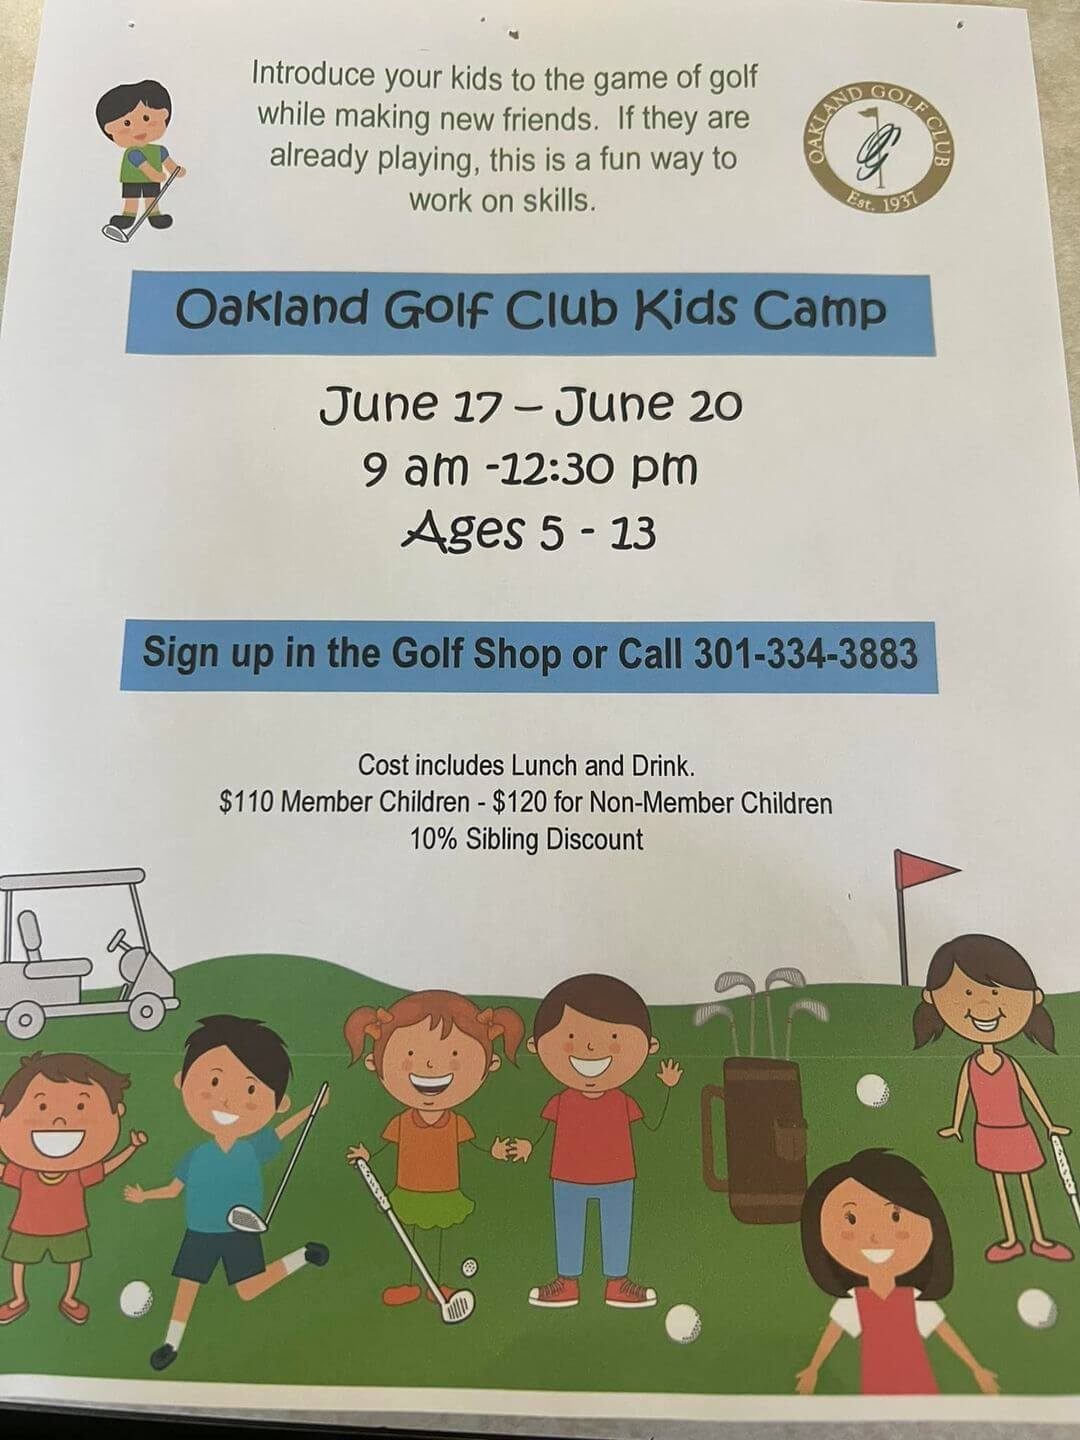 Oakland Golf Club Kids Camp at Deep Creek Lake, MD